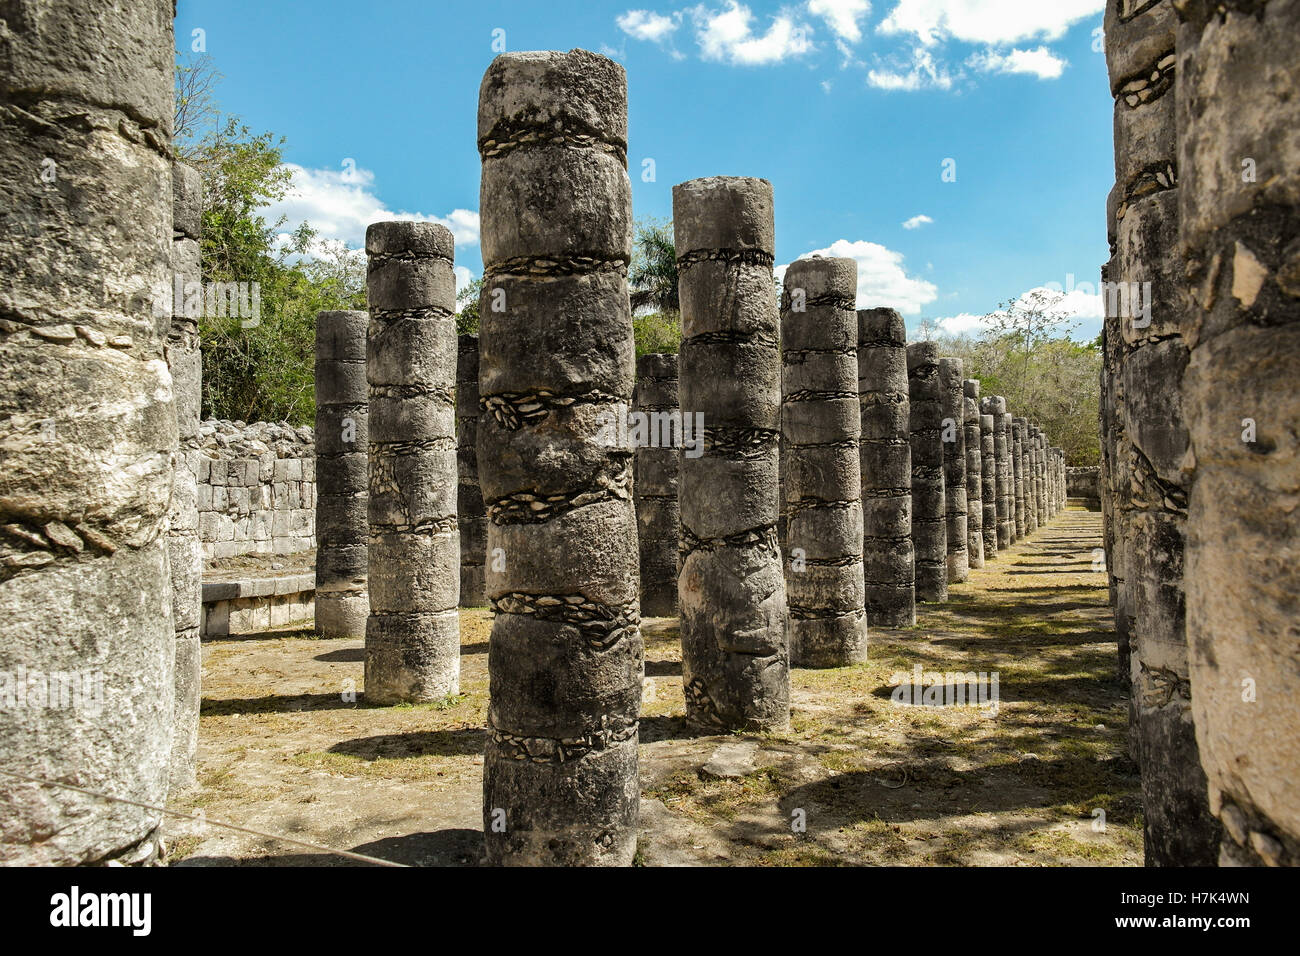 Spalten im Tempel der Krieger in Chichén Itzá, UNESCO World Heritage Site Yucatan - Mexiko Stockfoto